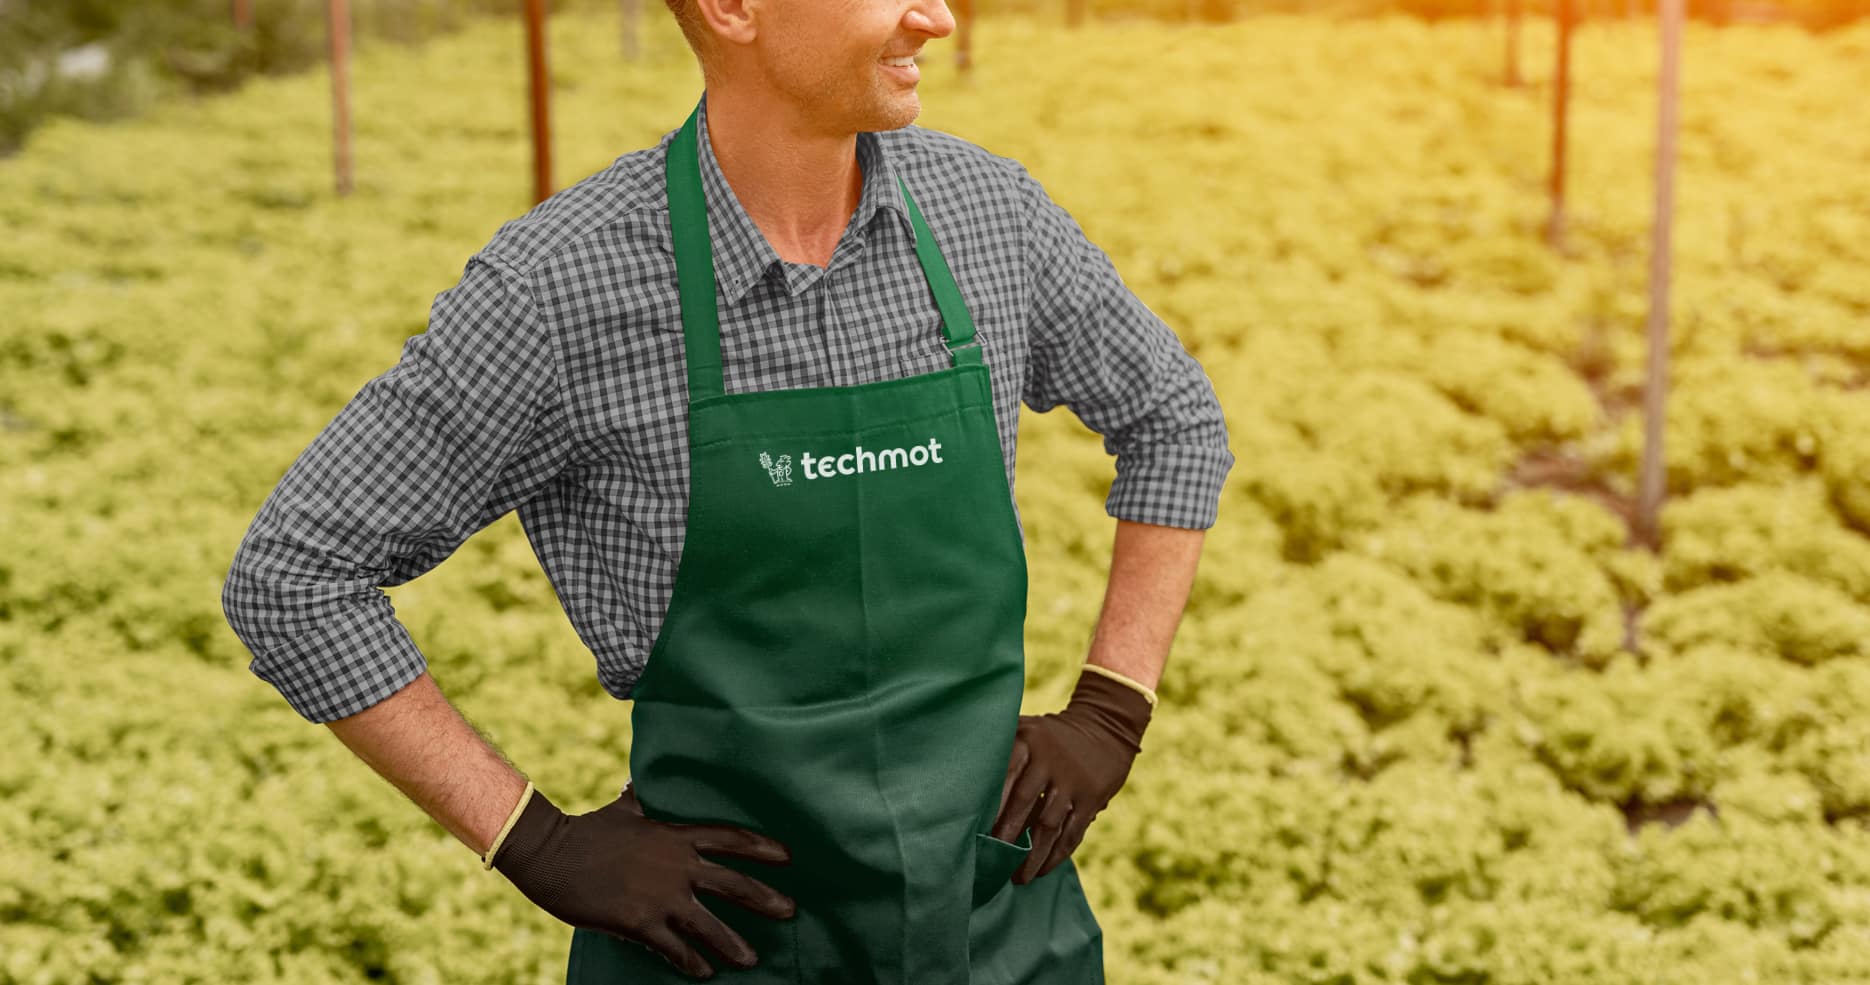 rebranding techmot logo techmot oznakowanie